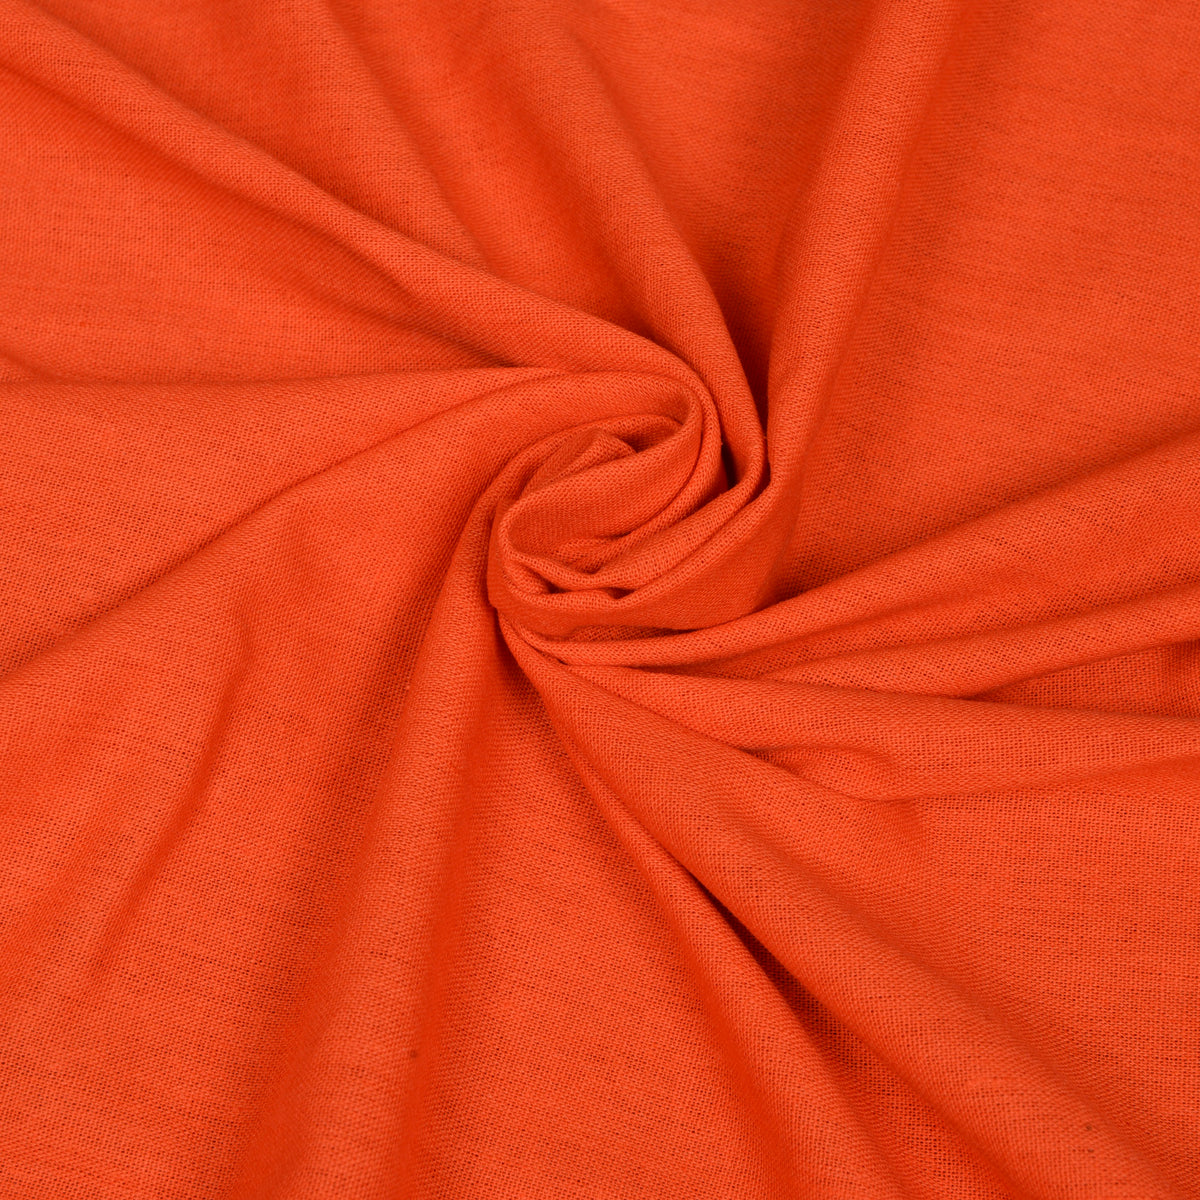 Night curtain orange Nuuk